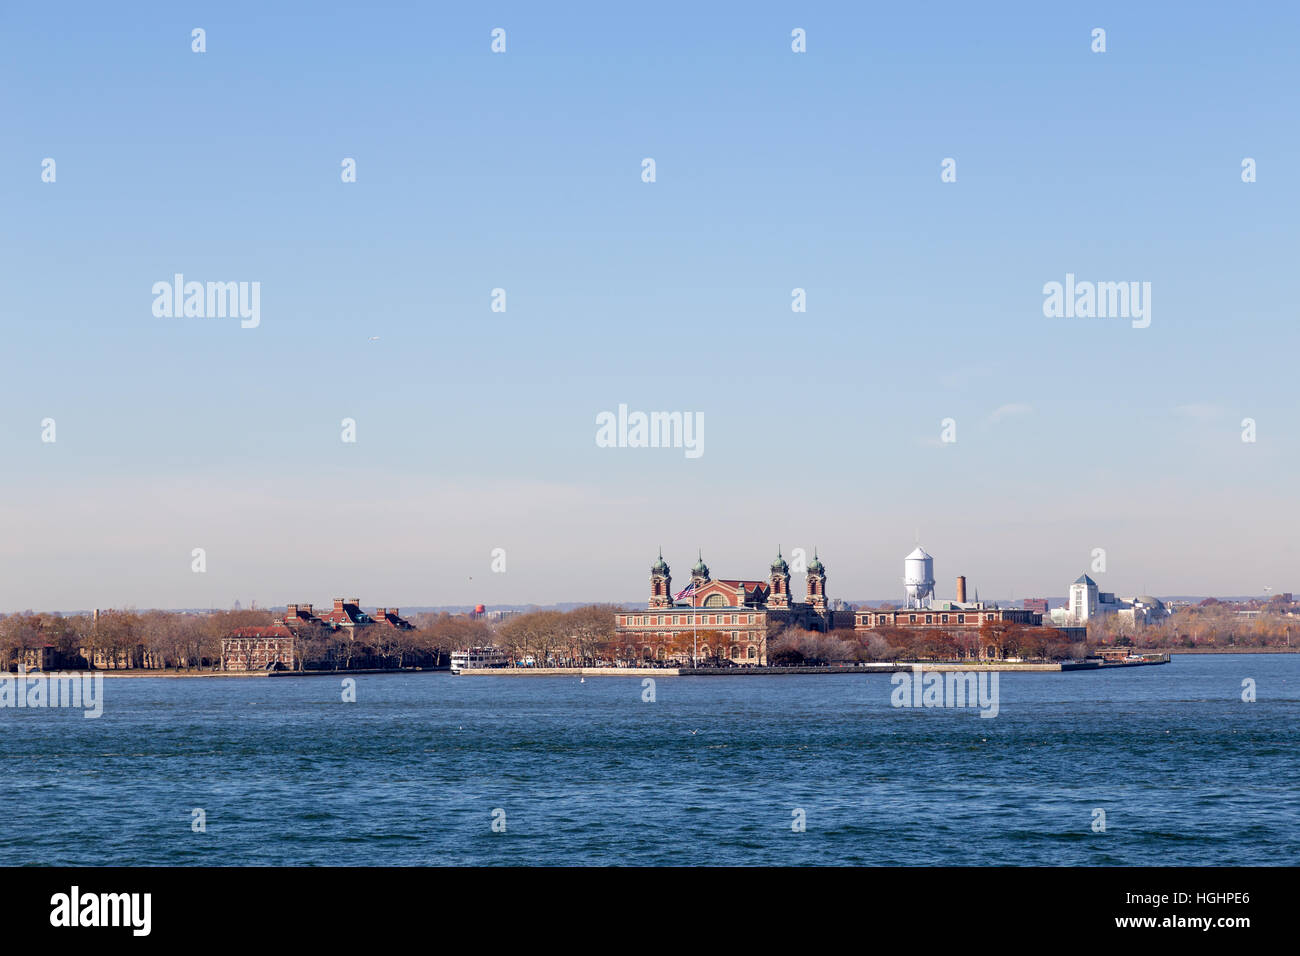 New York, United States of America - November 18, 2016: View of historical Ellis Island in New York harbor Stock Photo